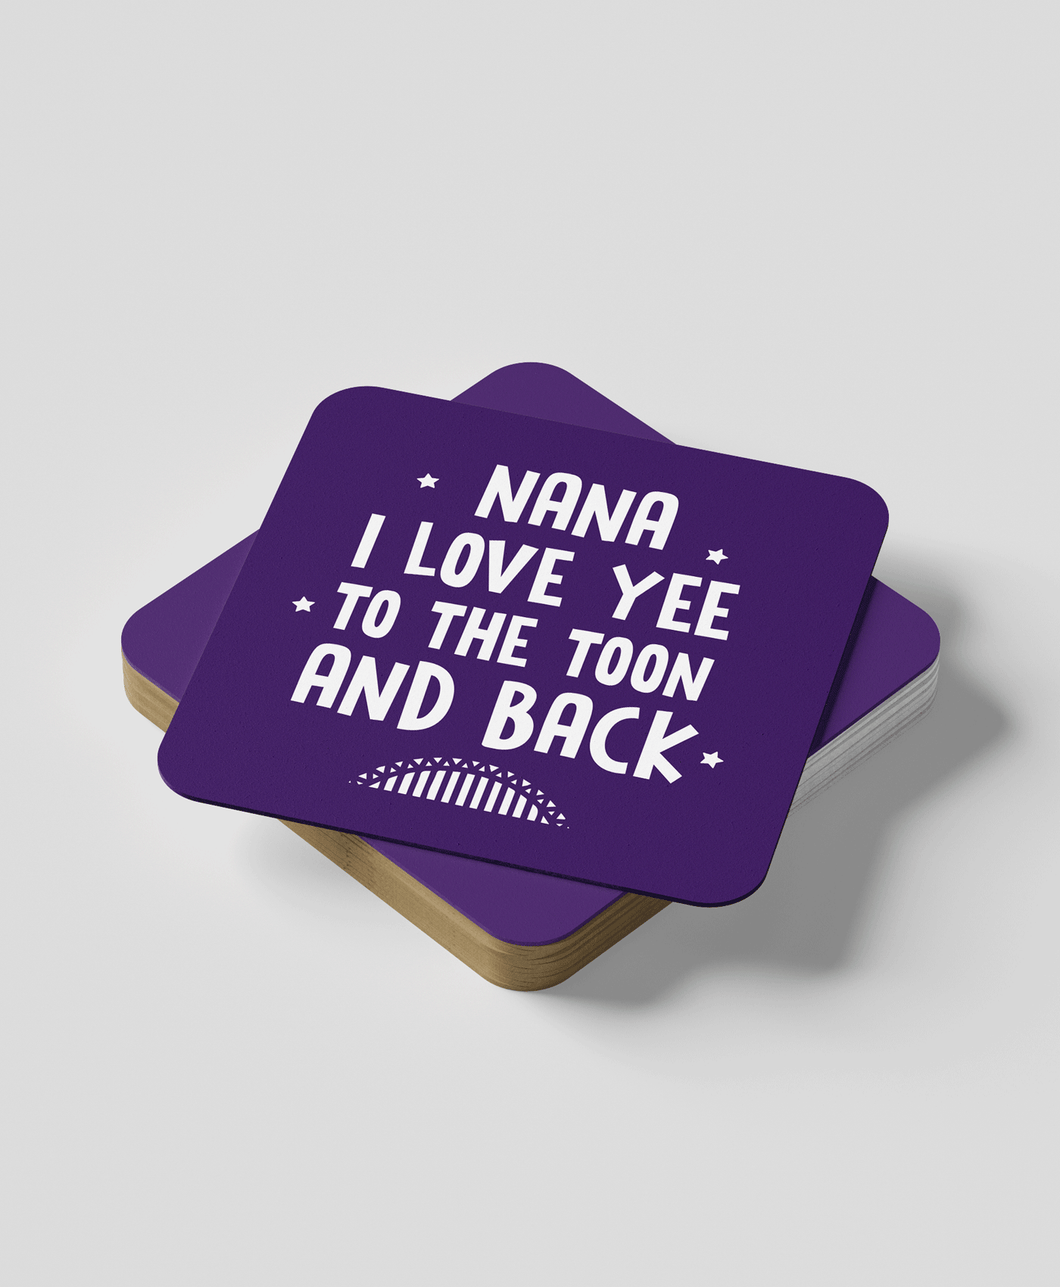 Nana Toon And Back - Coaster